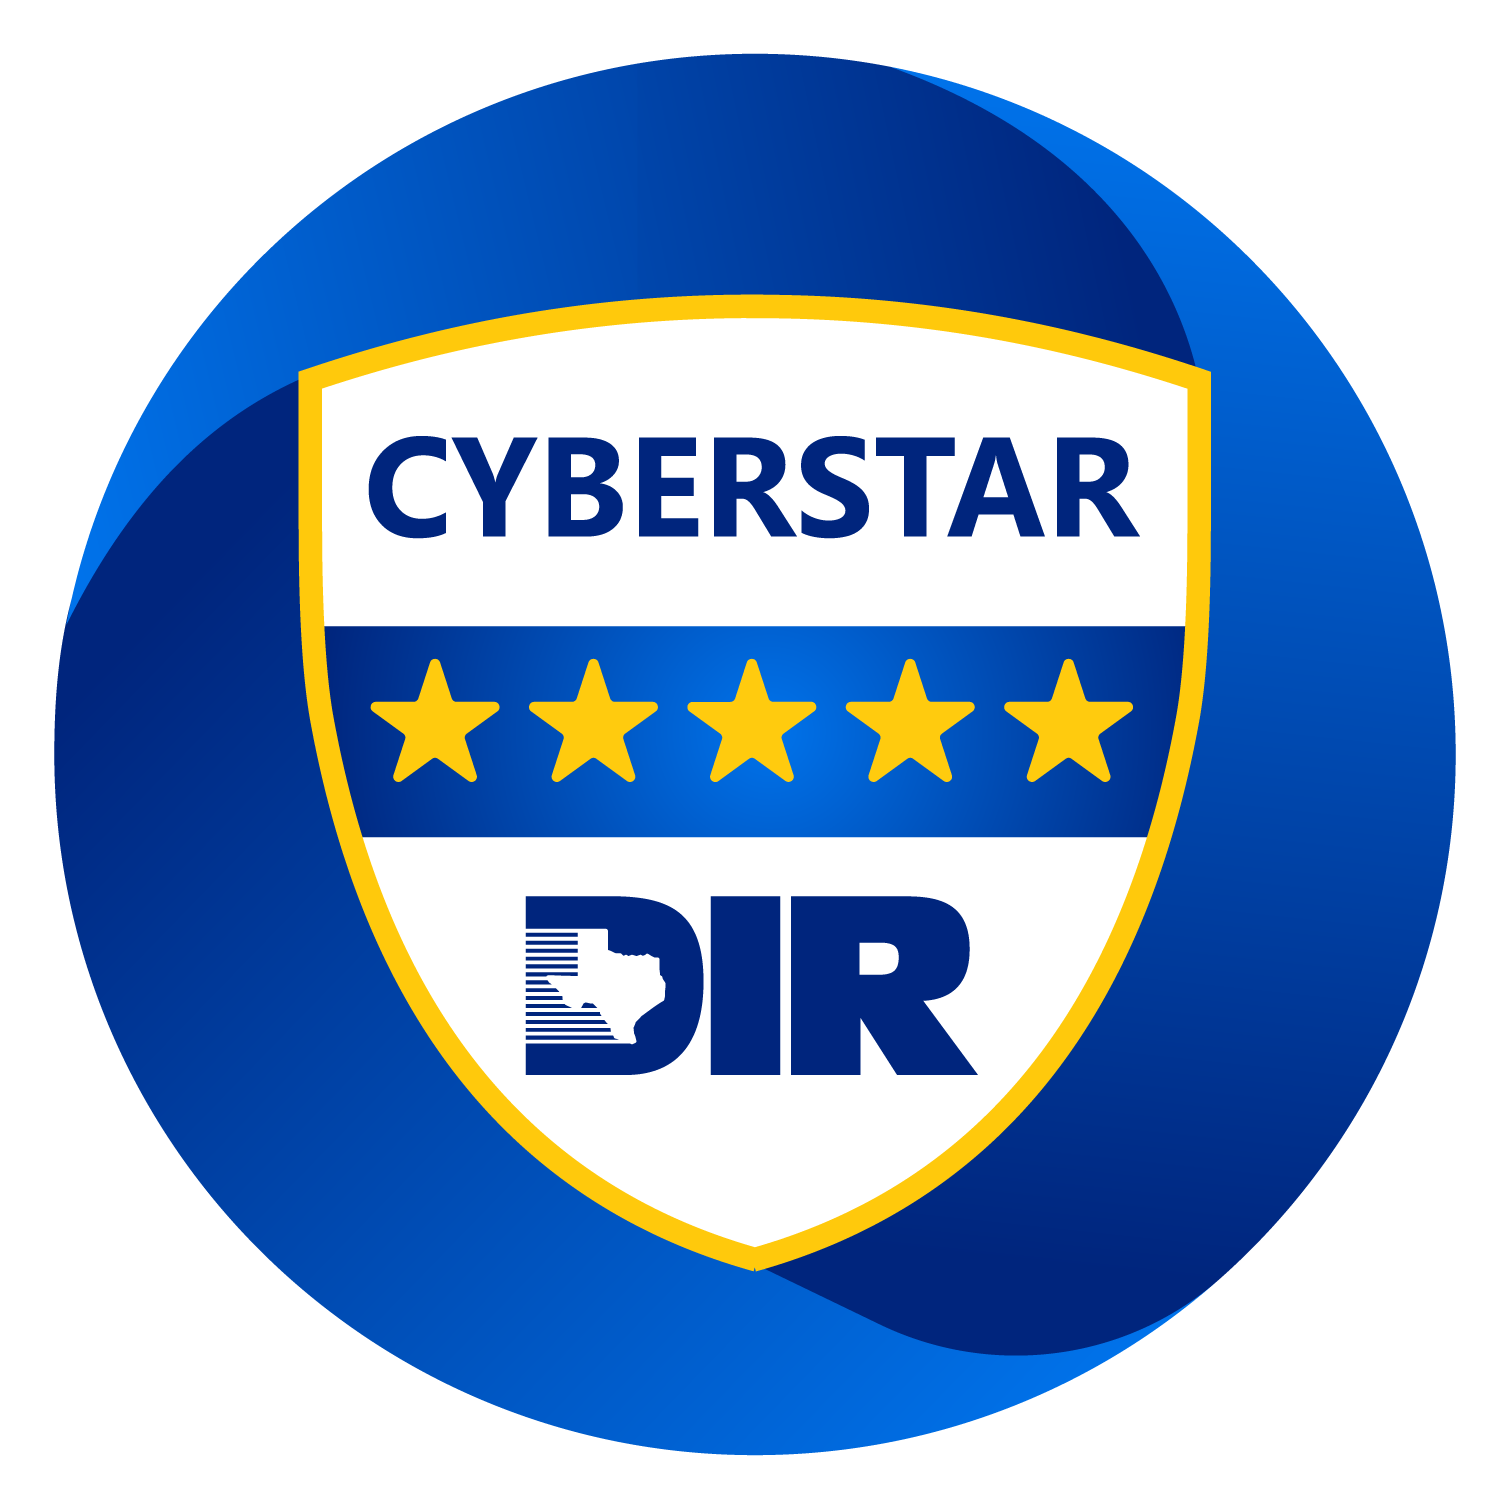 Texas Cyberstar Certificate Program